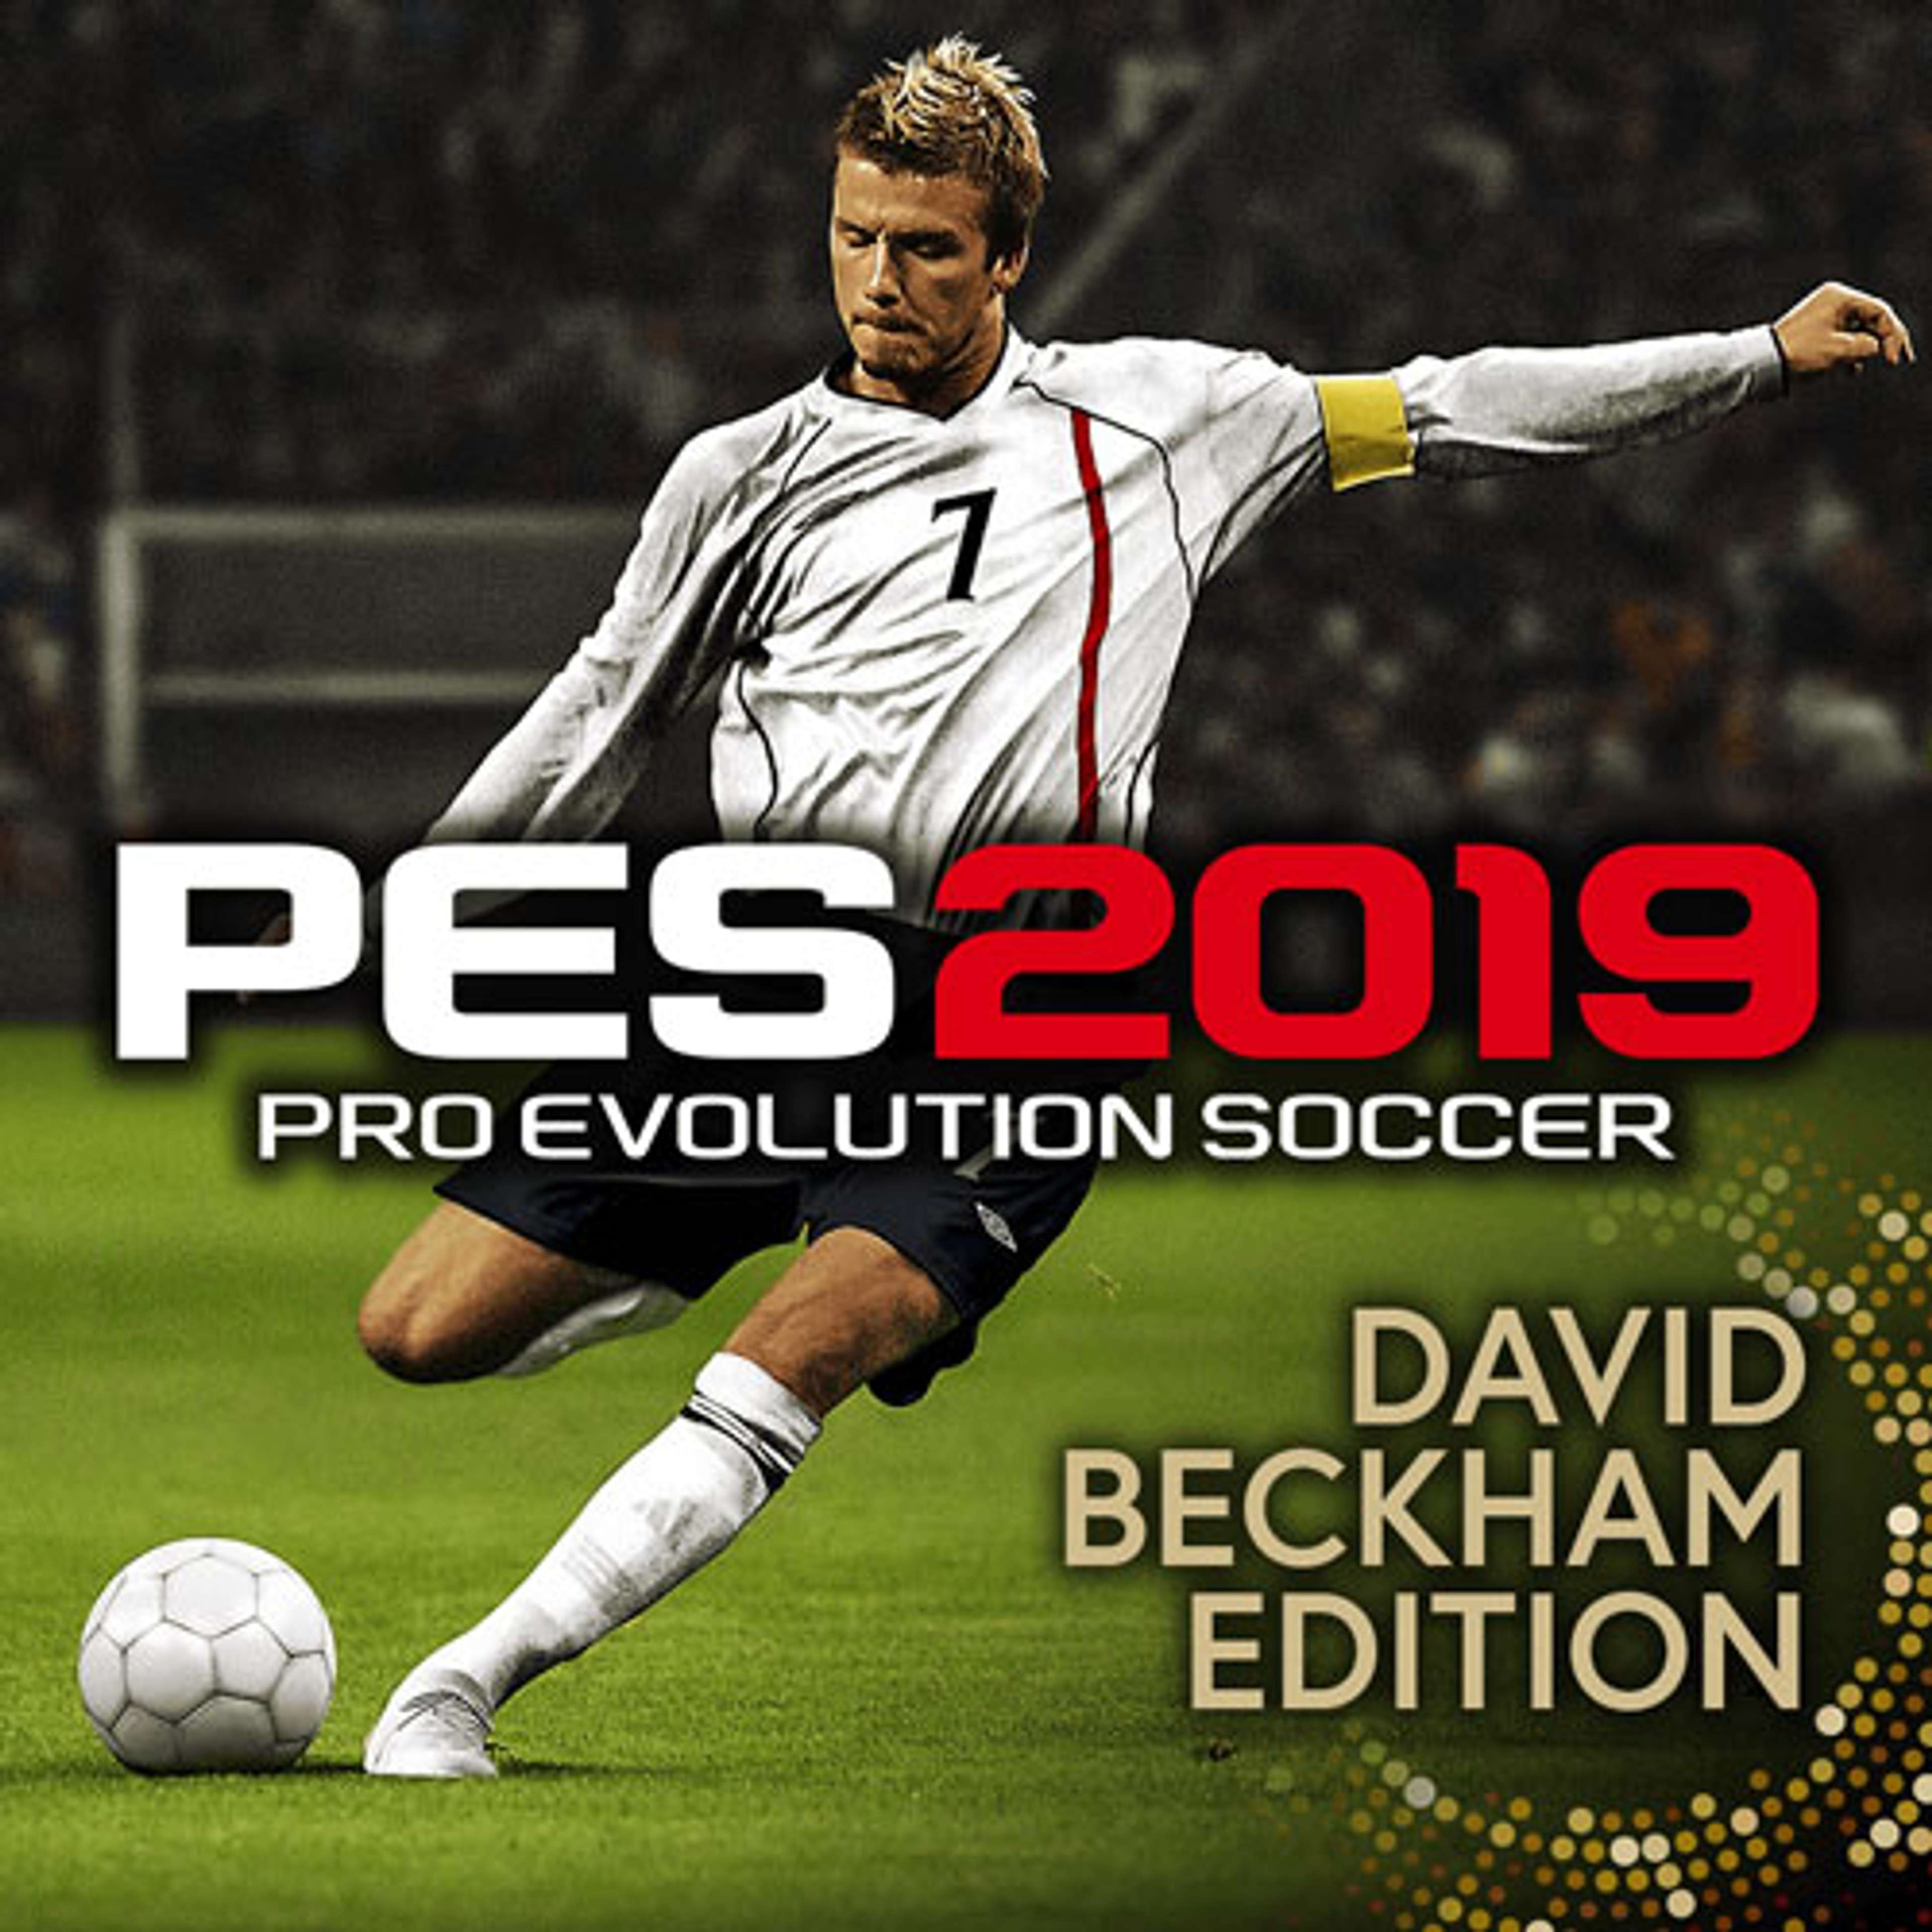 Embed only David Beckham edition PES 2019